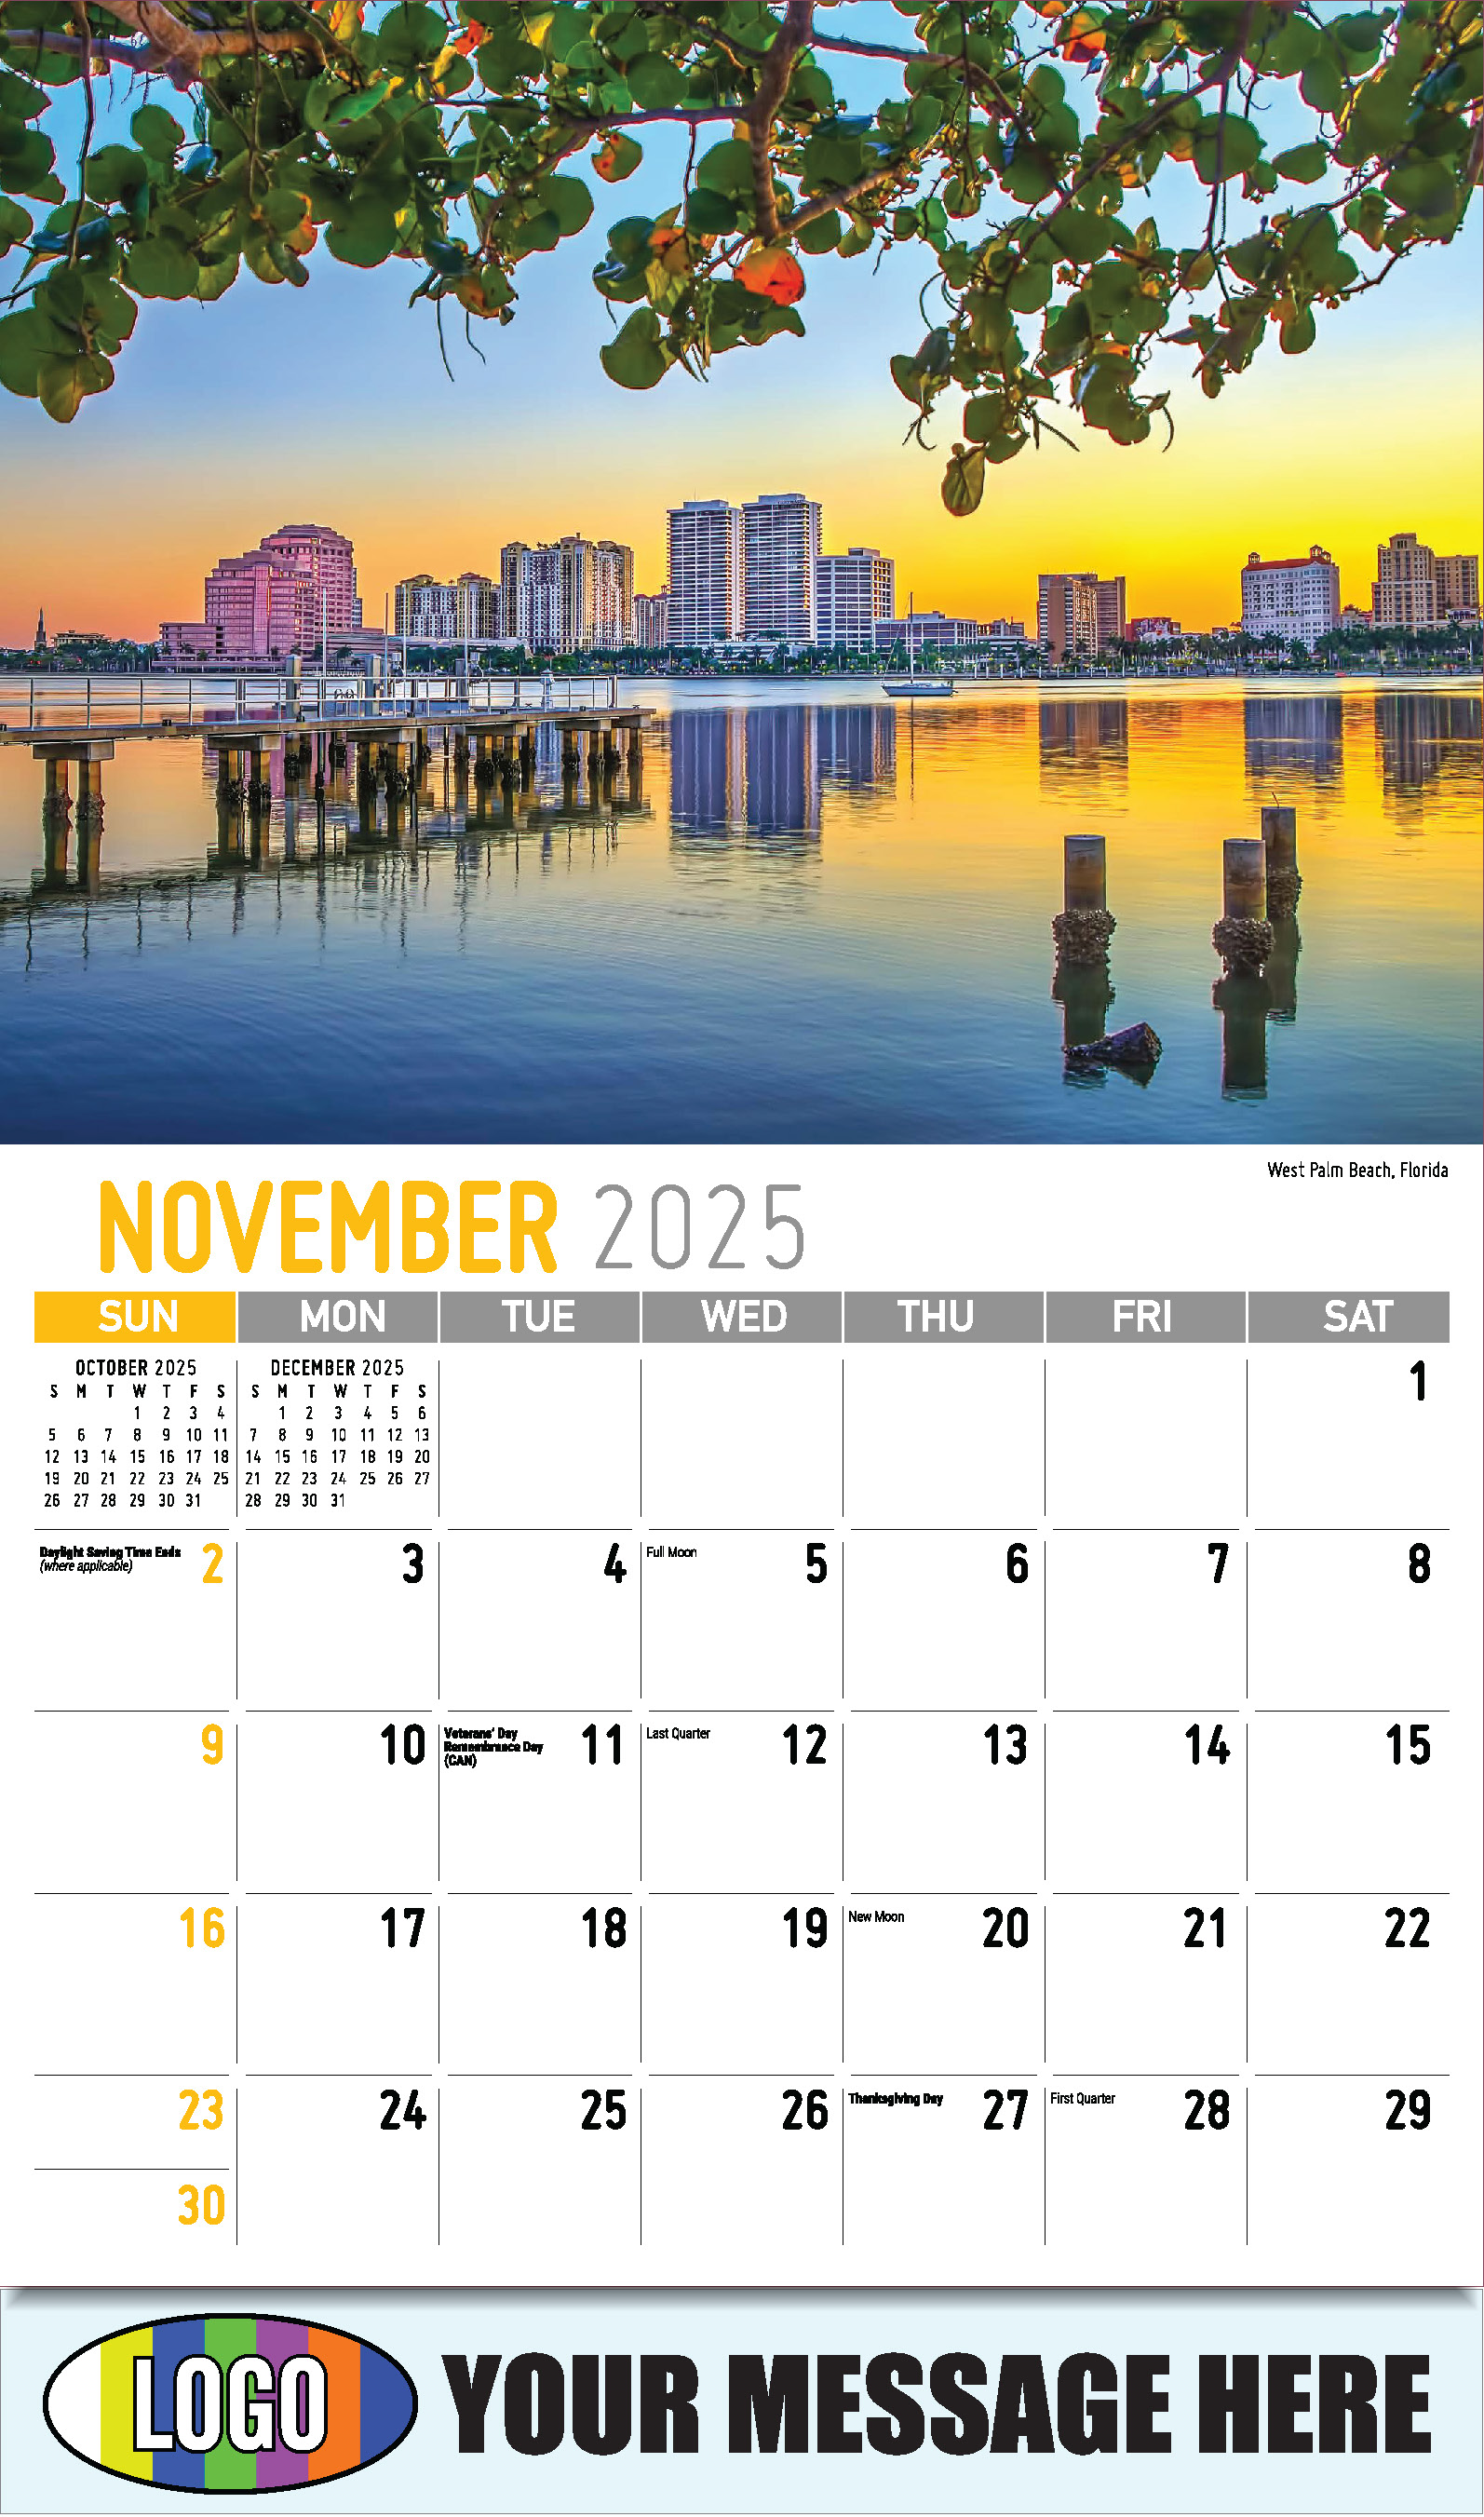 Scenes of America 2025 Business Advertising Wall Calendar - November